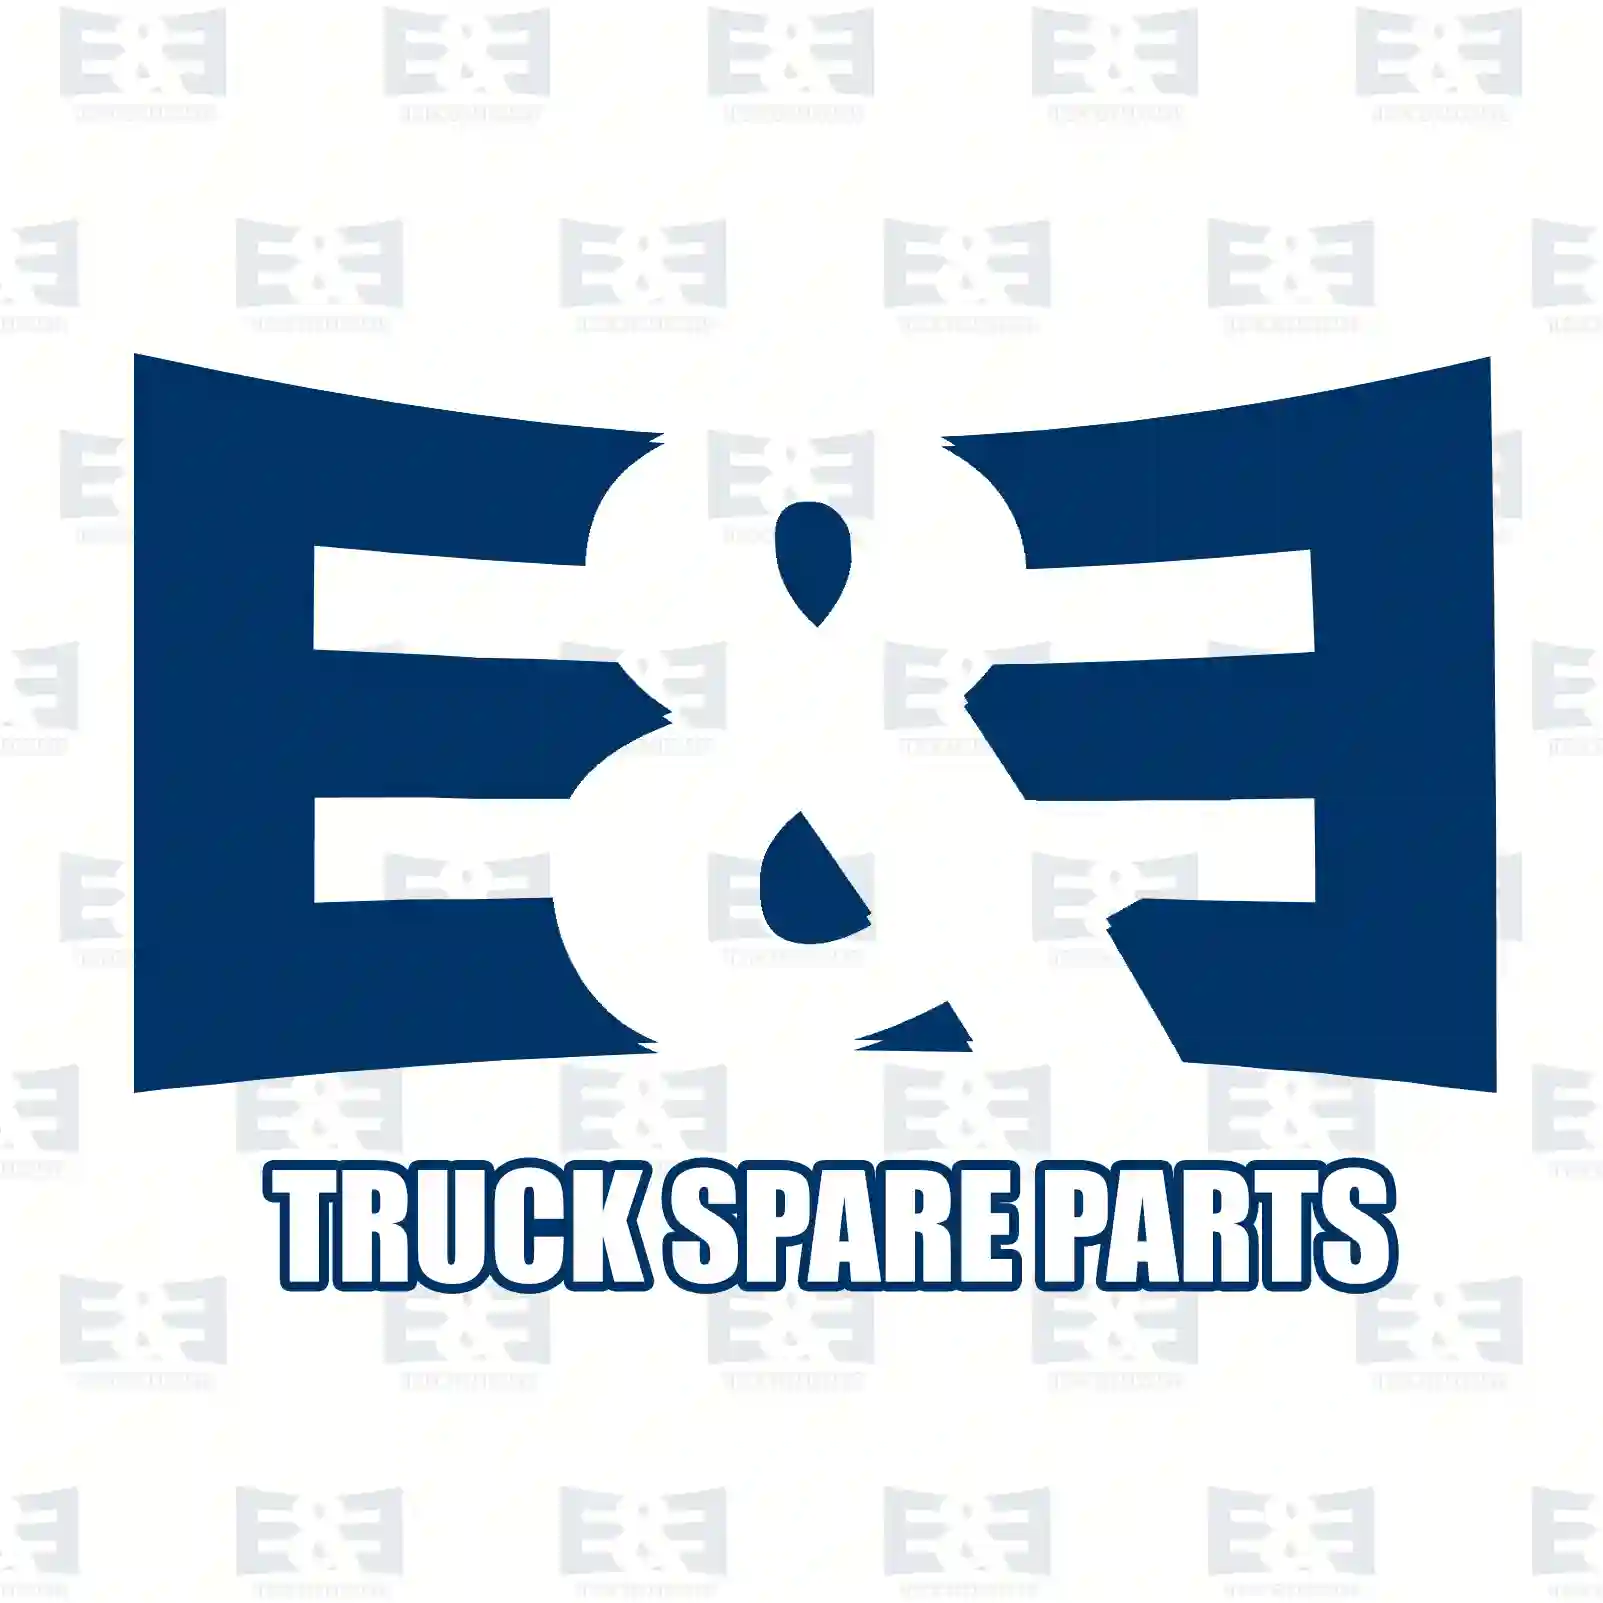  Socket, aluminium, flat connector || E&E Truck Spare Parts | Truck Spare Parts, Auotomotive Spare Parts